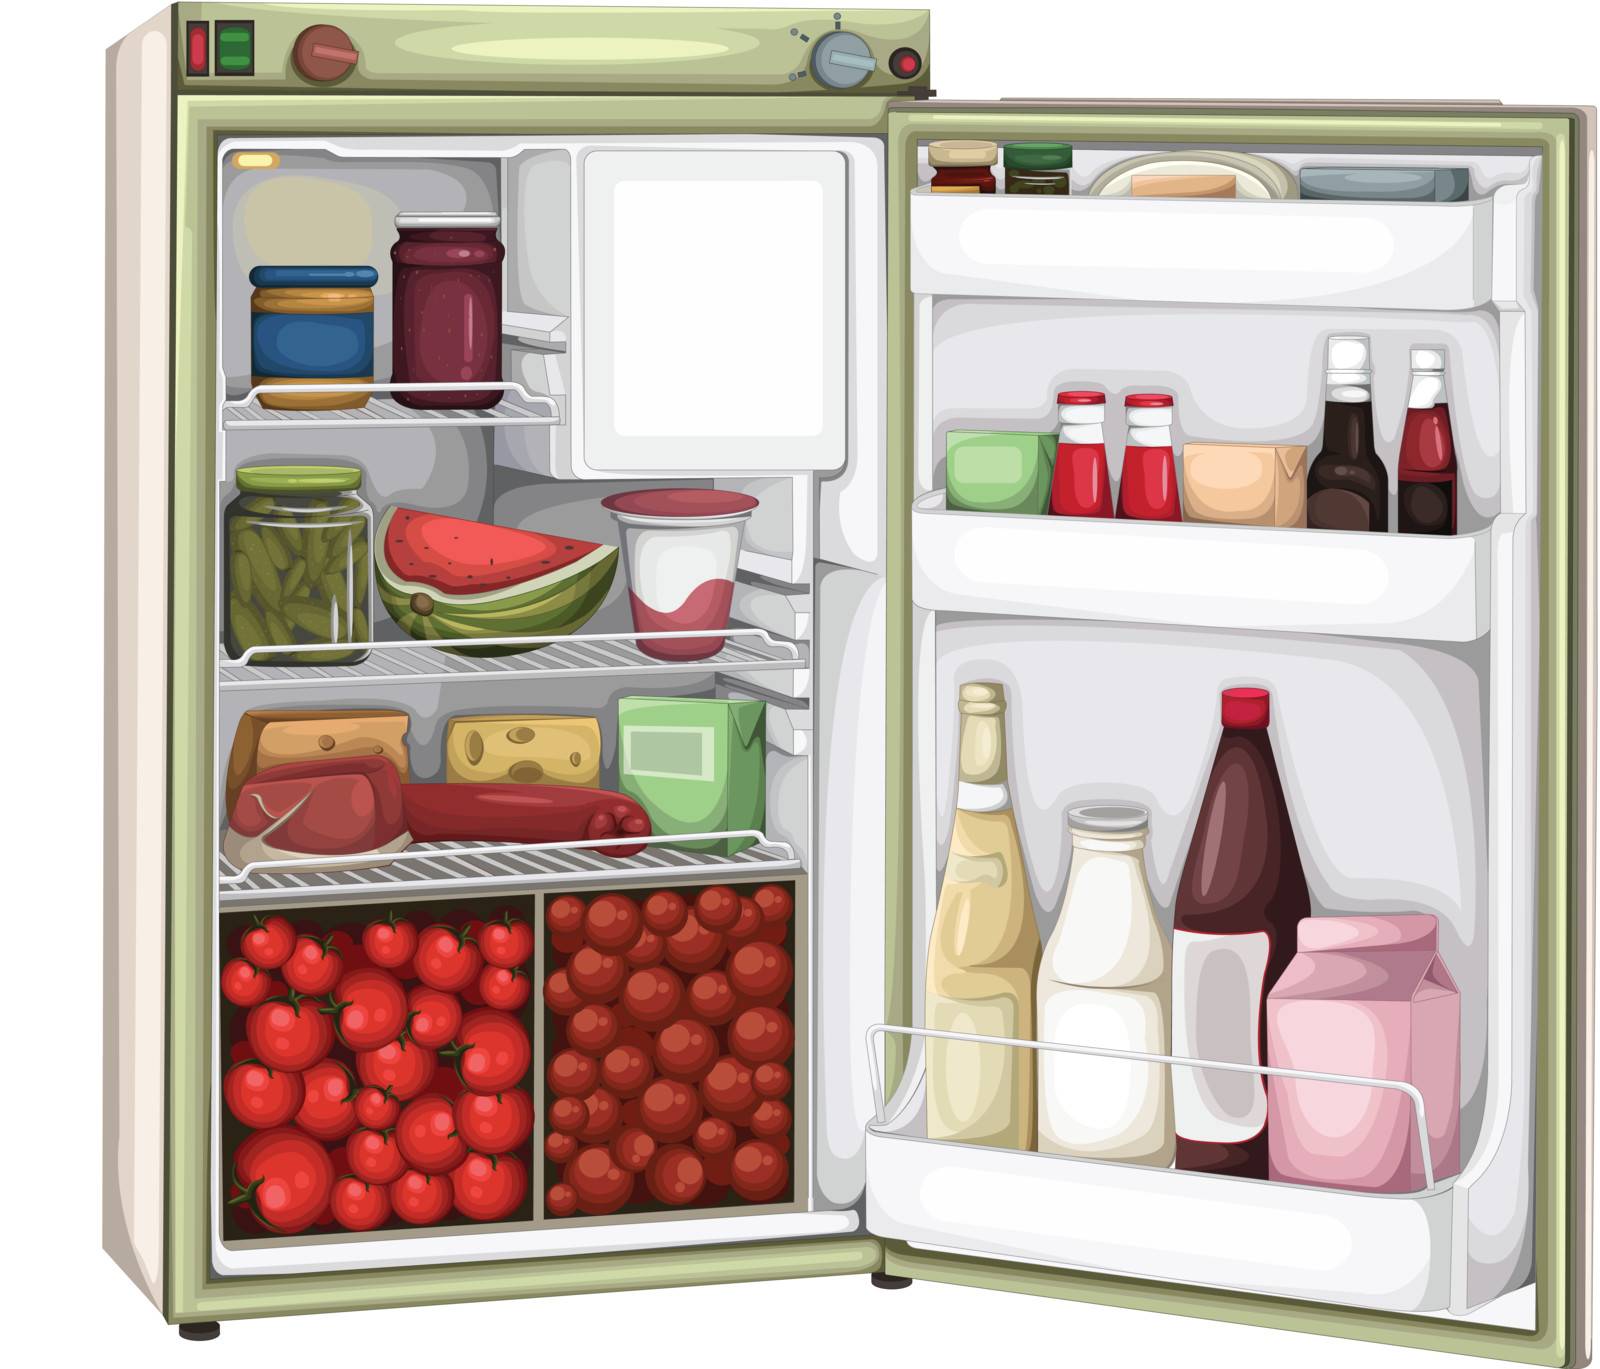 Refrigerator vector